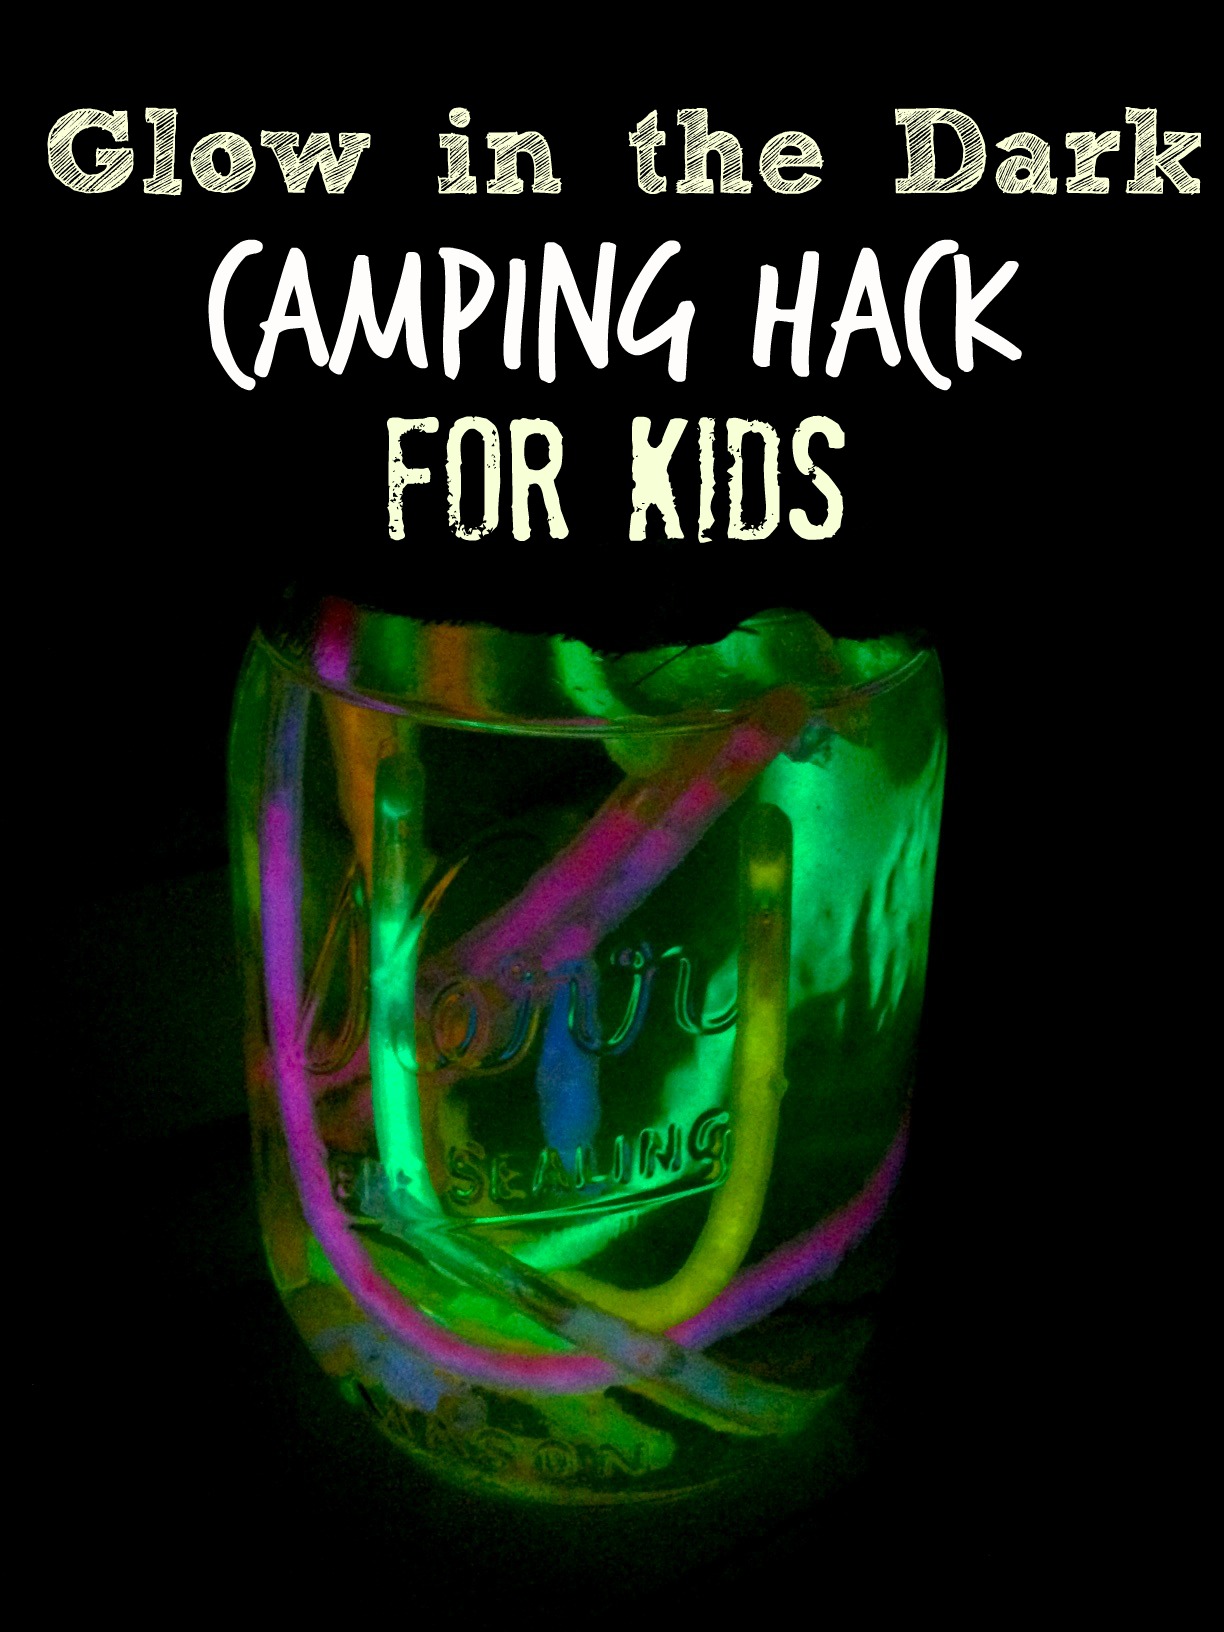 https://www.survivingateacherssalary.com/wp-content/uploads/2015/07/Glow-in-the-Dark-Camping-Hack-Kids.jpg